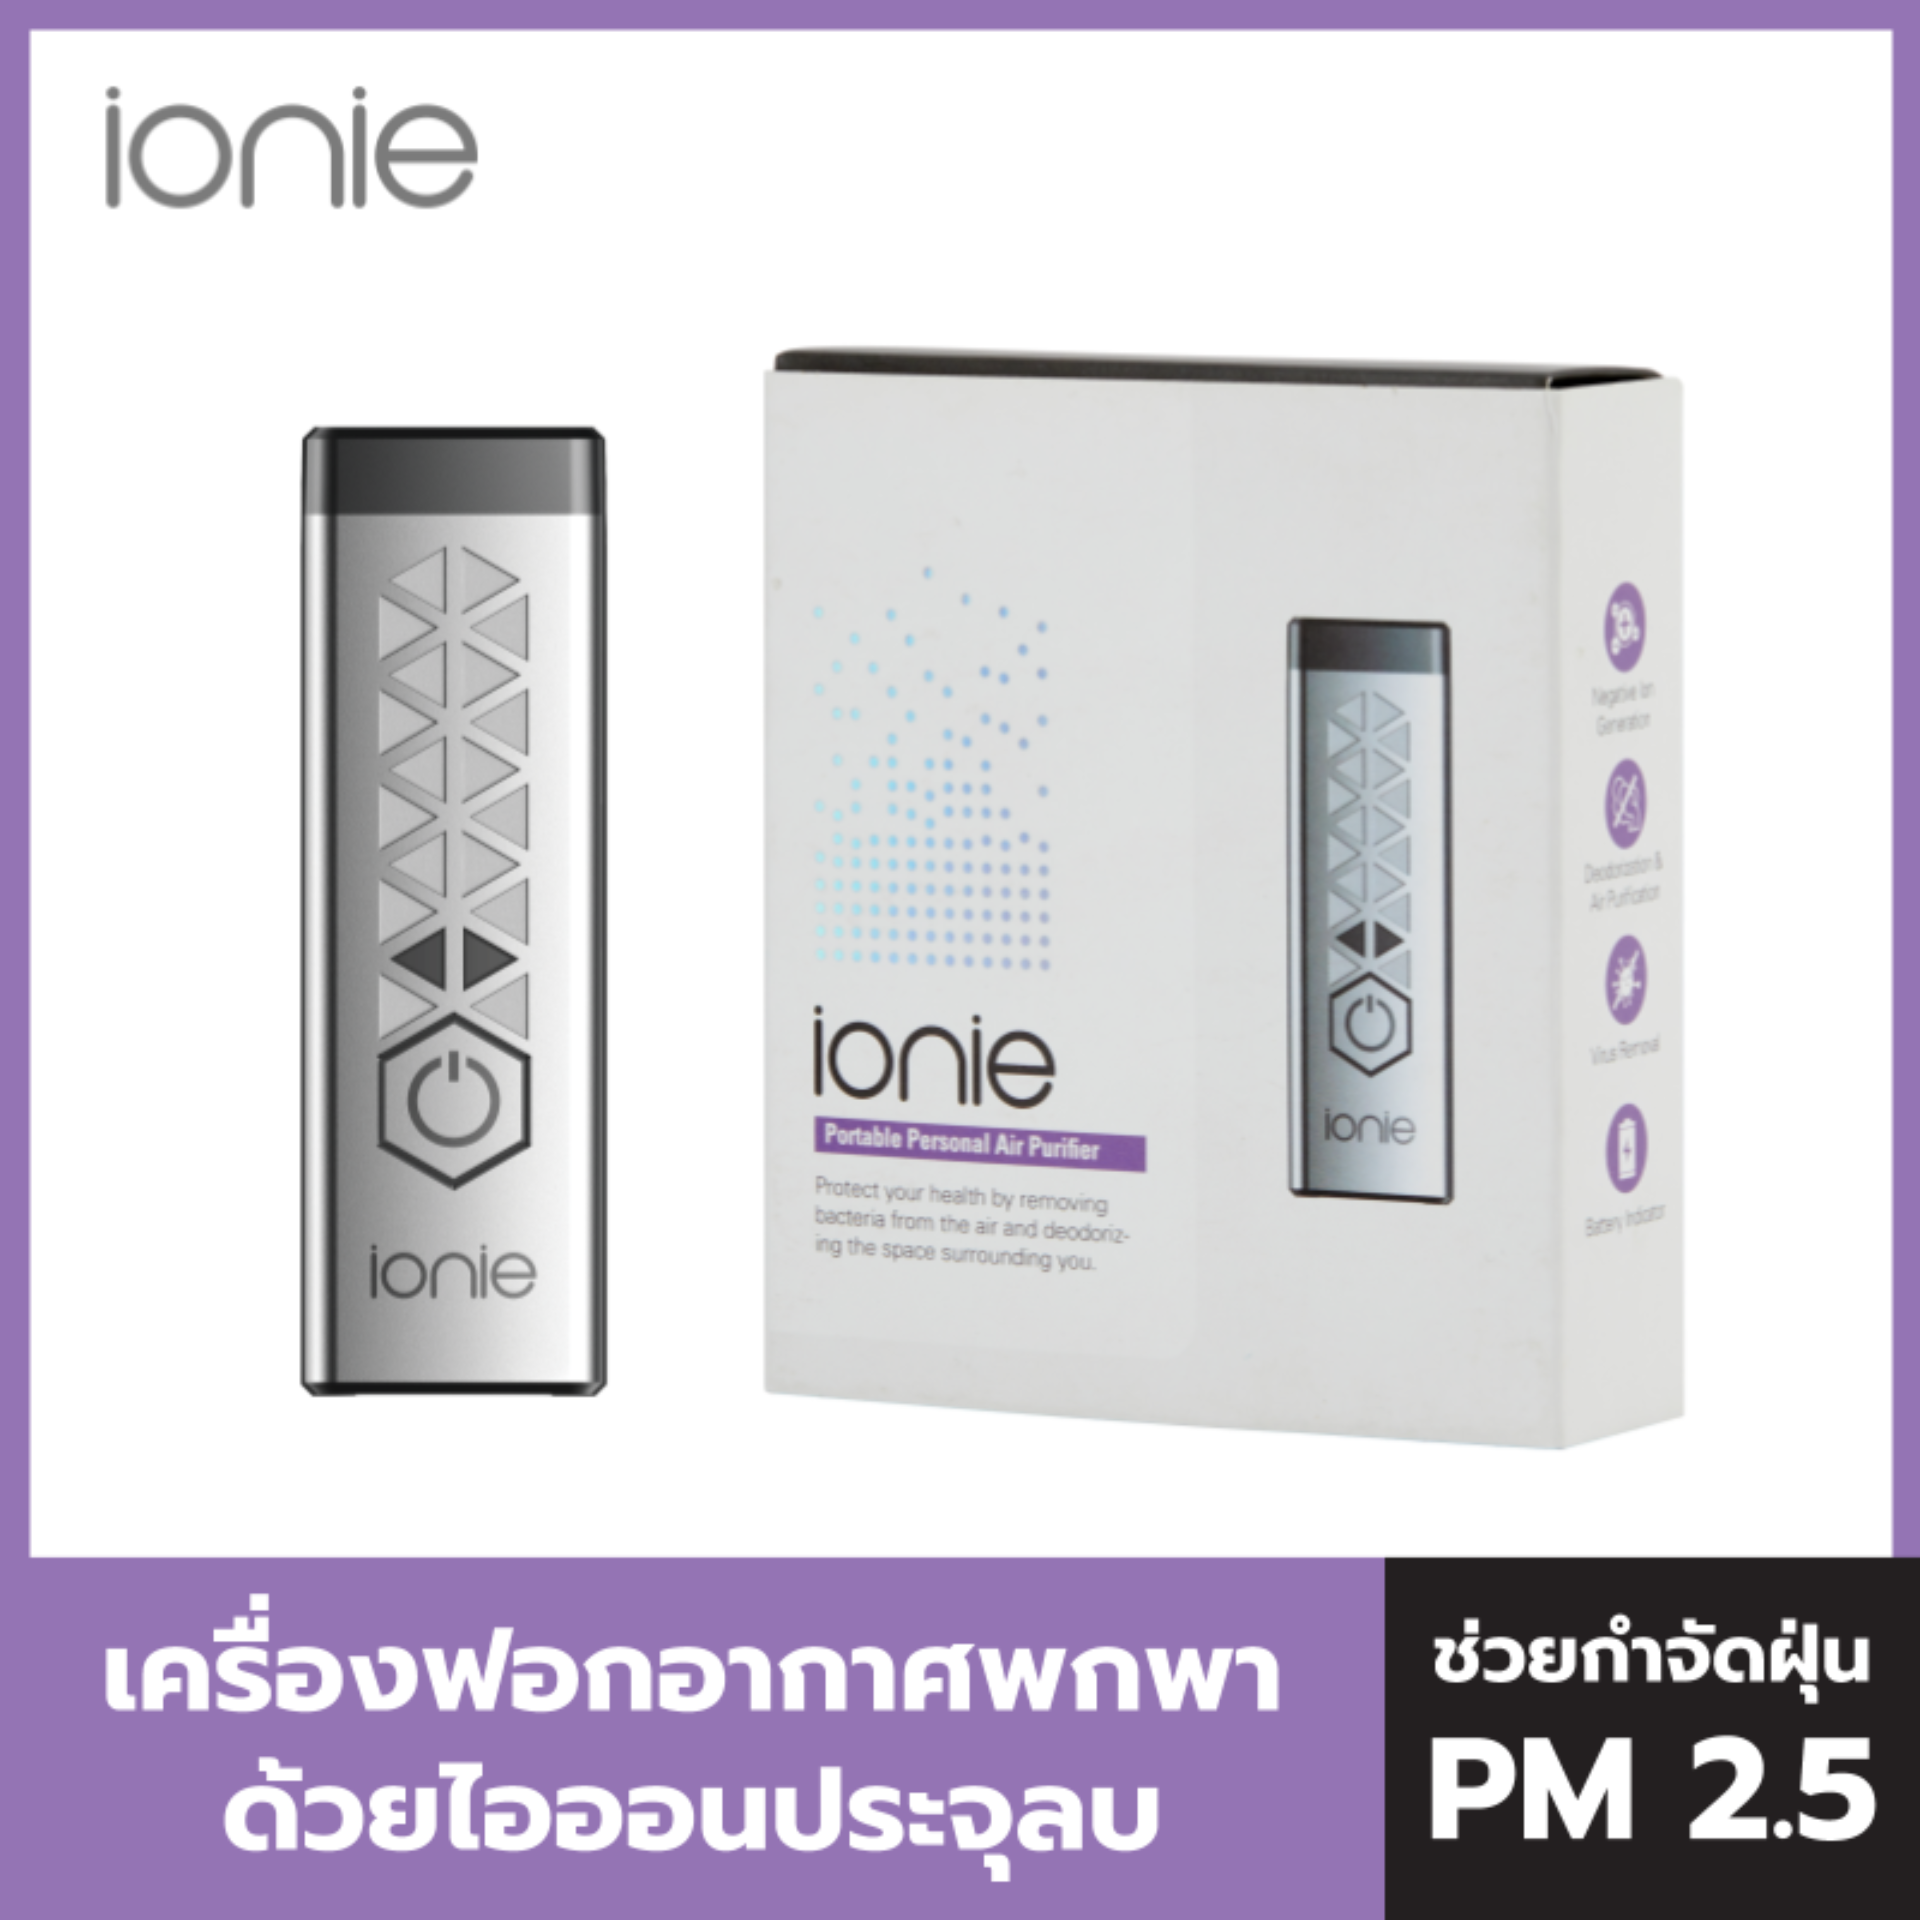 IONIE Portable air purifier ไอออนนี่ เครื่องฟอกอากาศแบบพกพา สีเงิน รุ่น IN0001